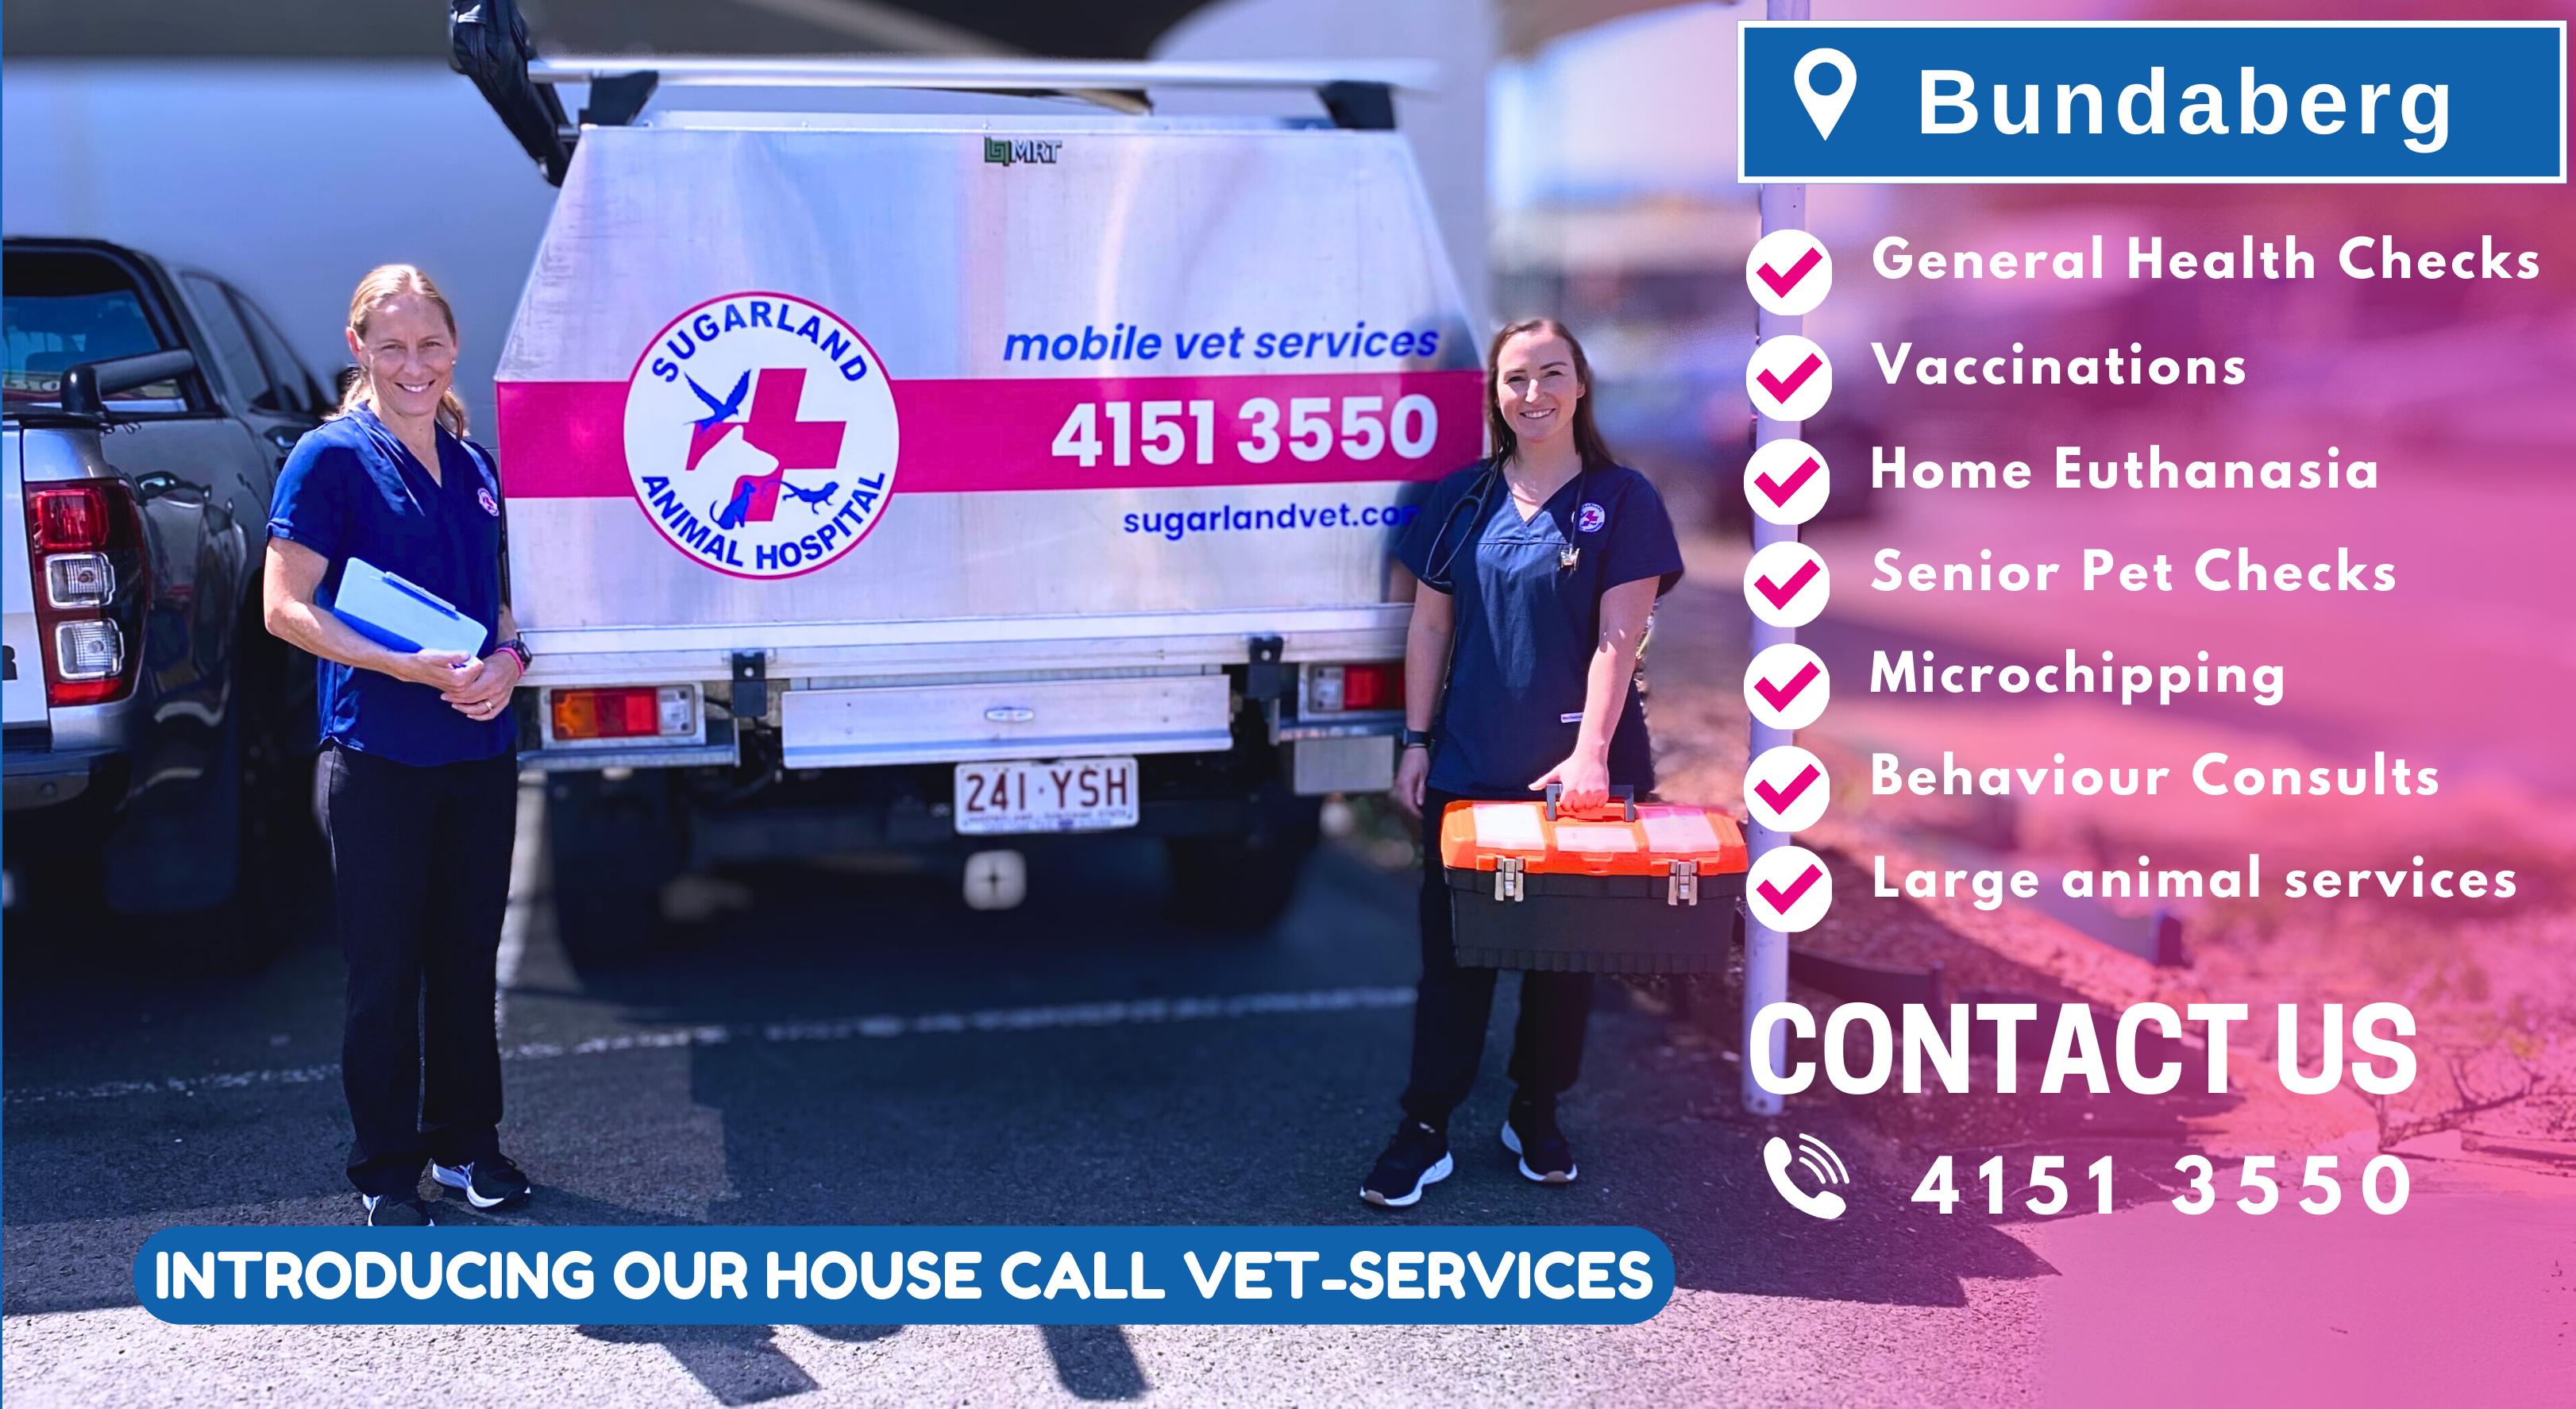 Emergency House-Call Vet Service at Sugarland Animal Hospital